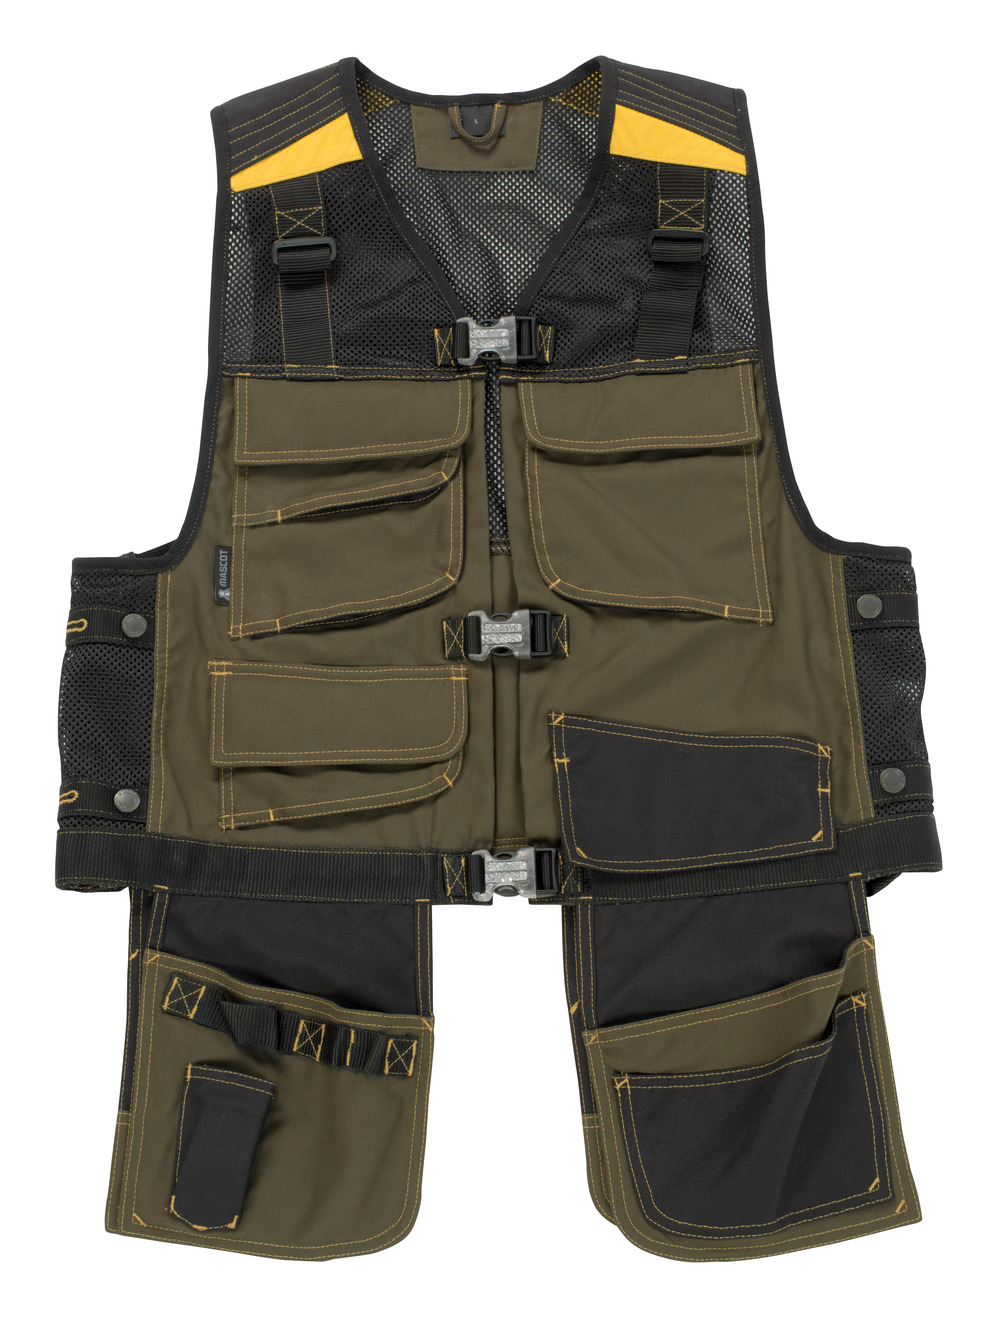 Mascot Workwear Serpa Tool Vest | eBay